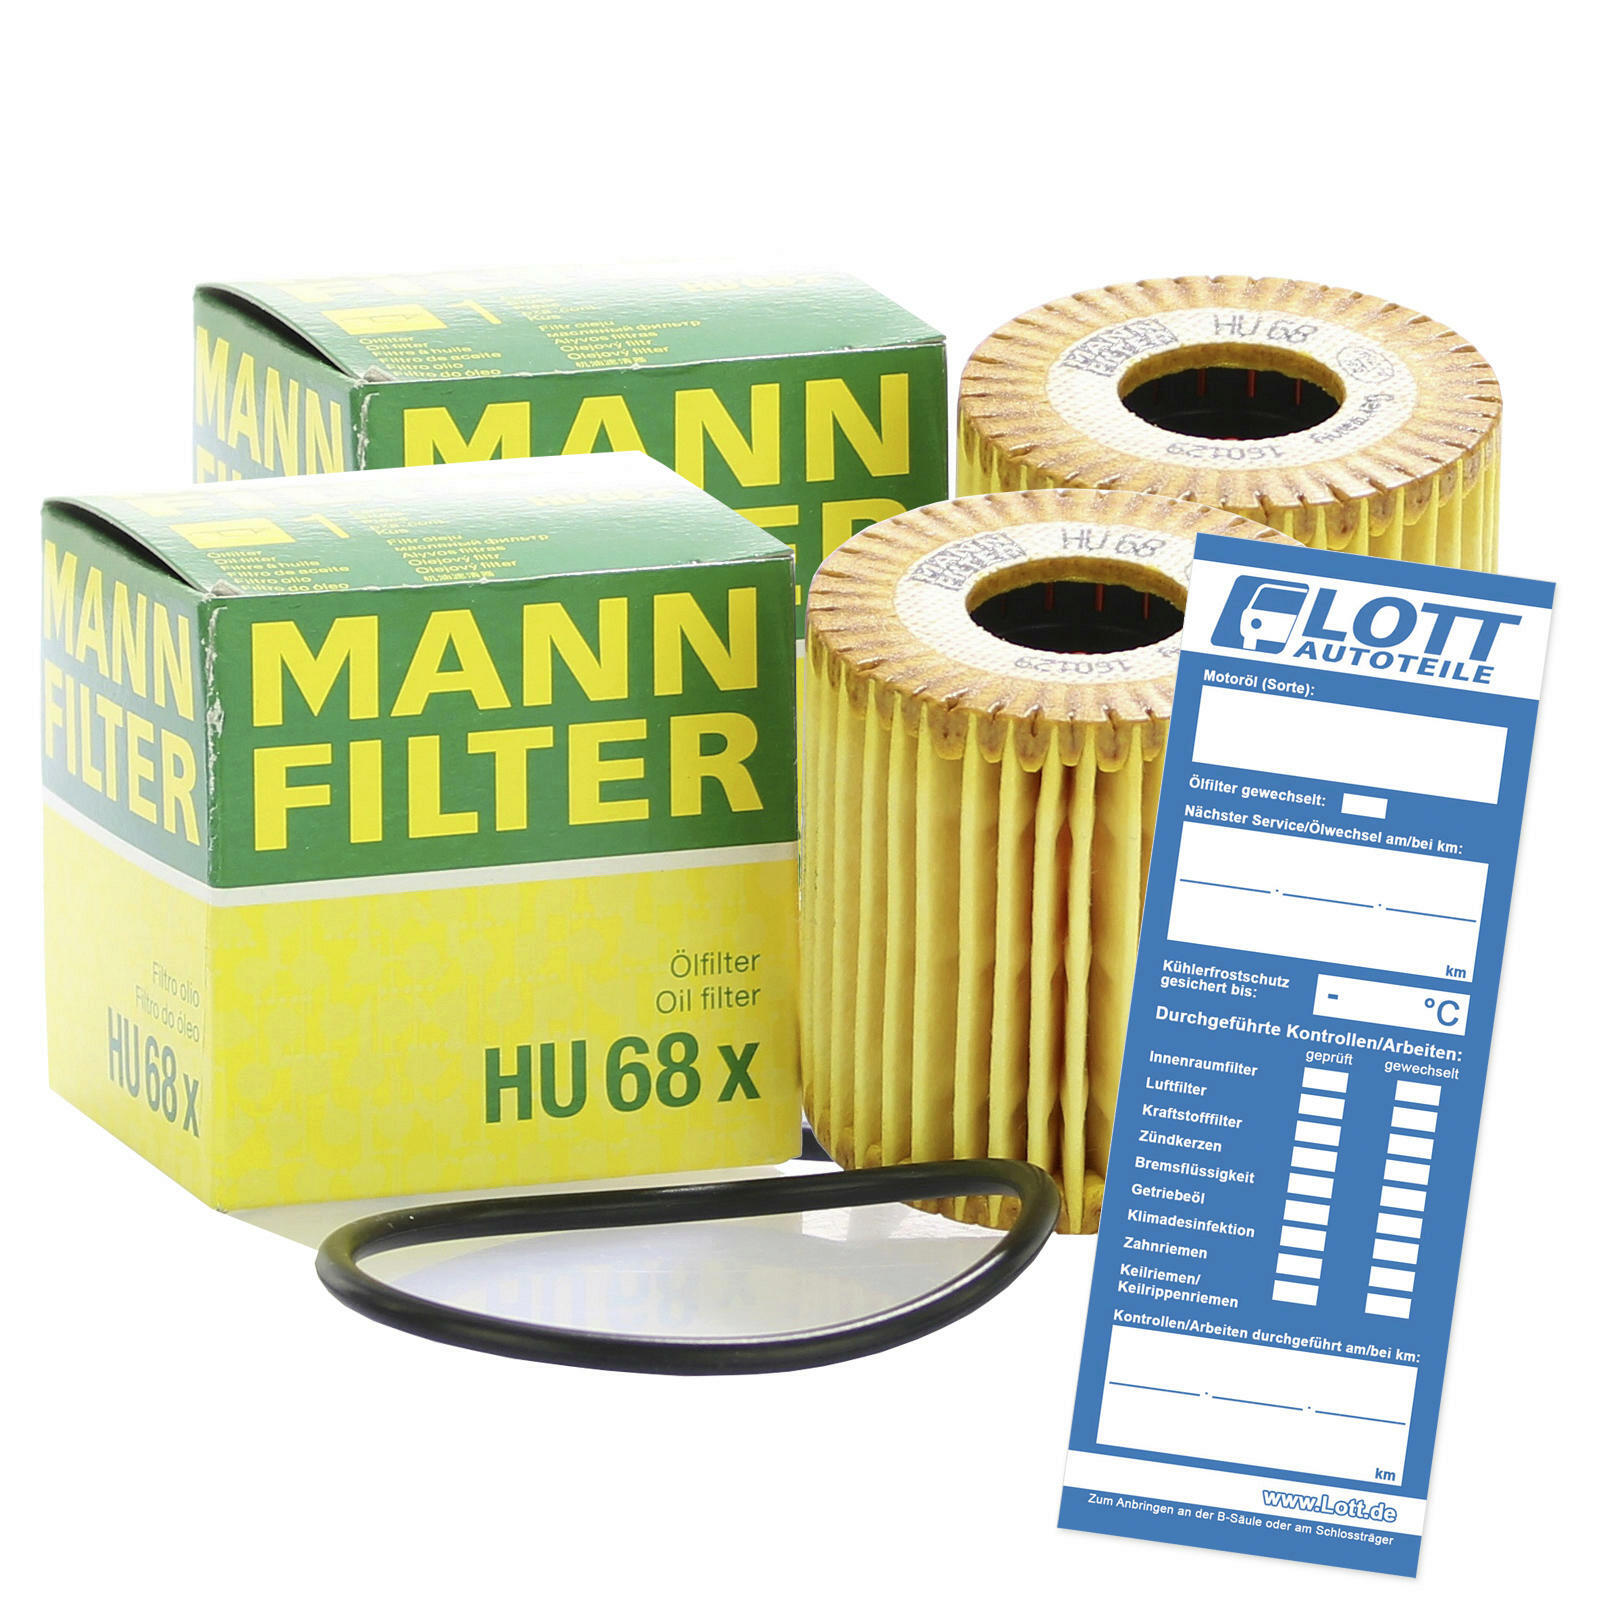 MANN-FILTER Oil Filter evotop